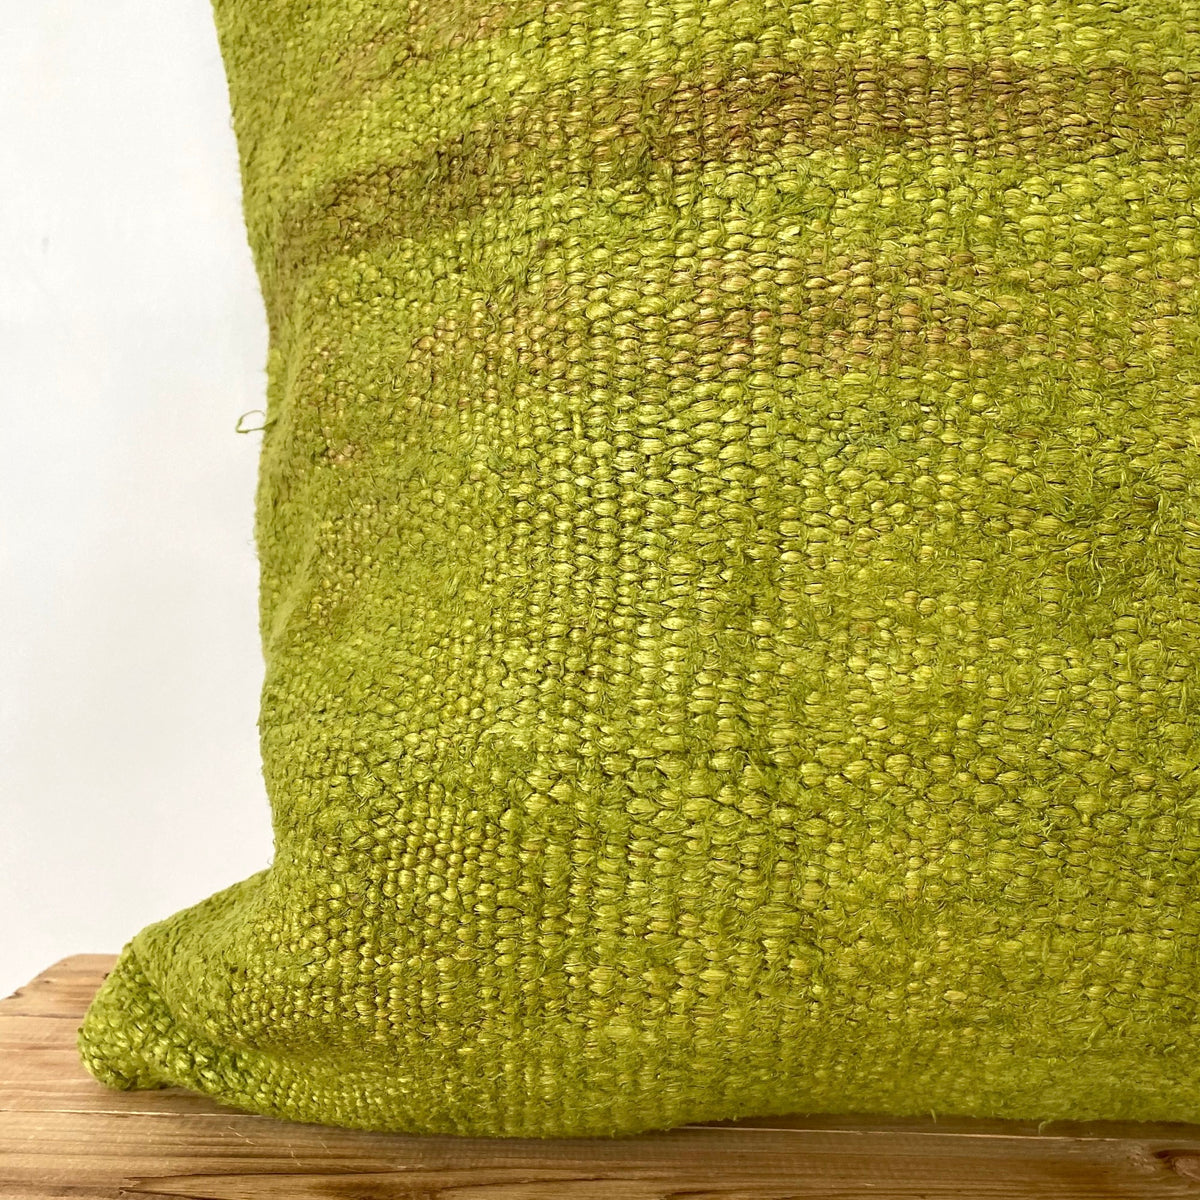 Gevah - Olive Green Hemp Pillow Cover - kudenrugs